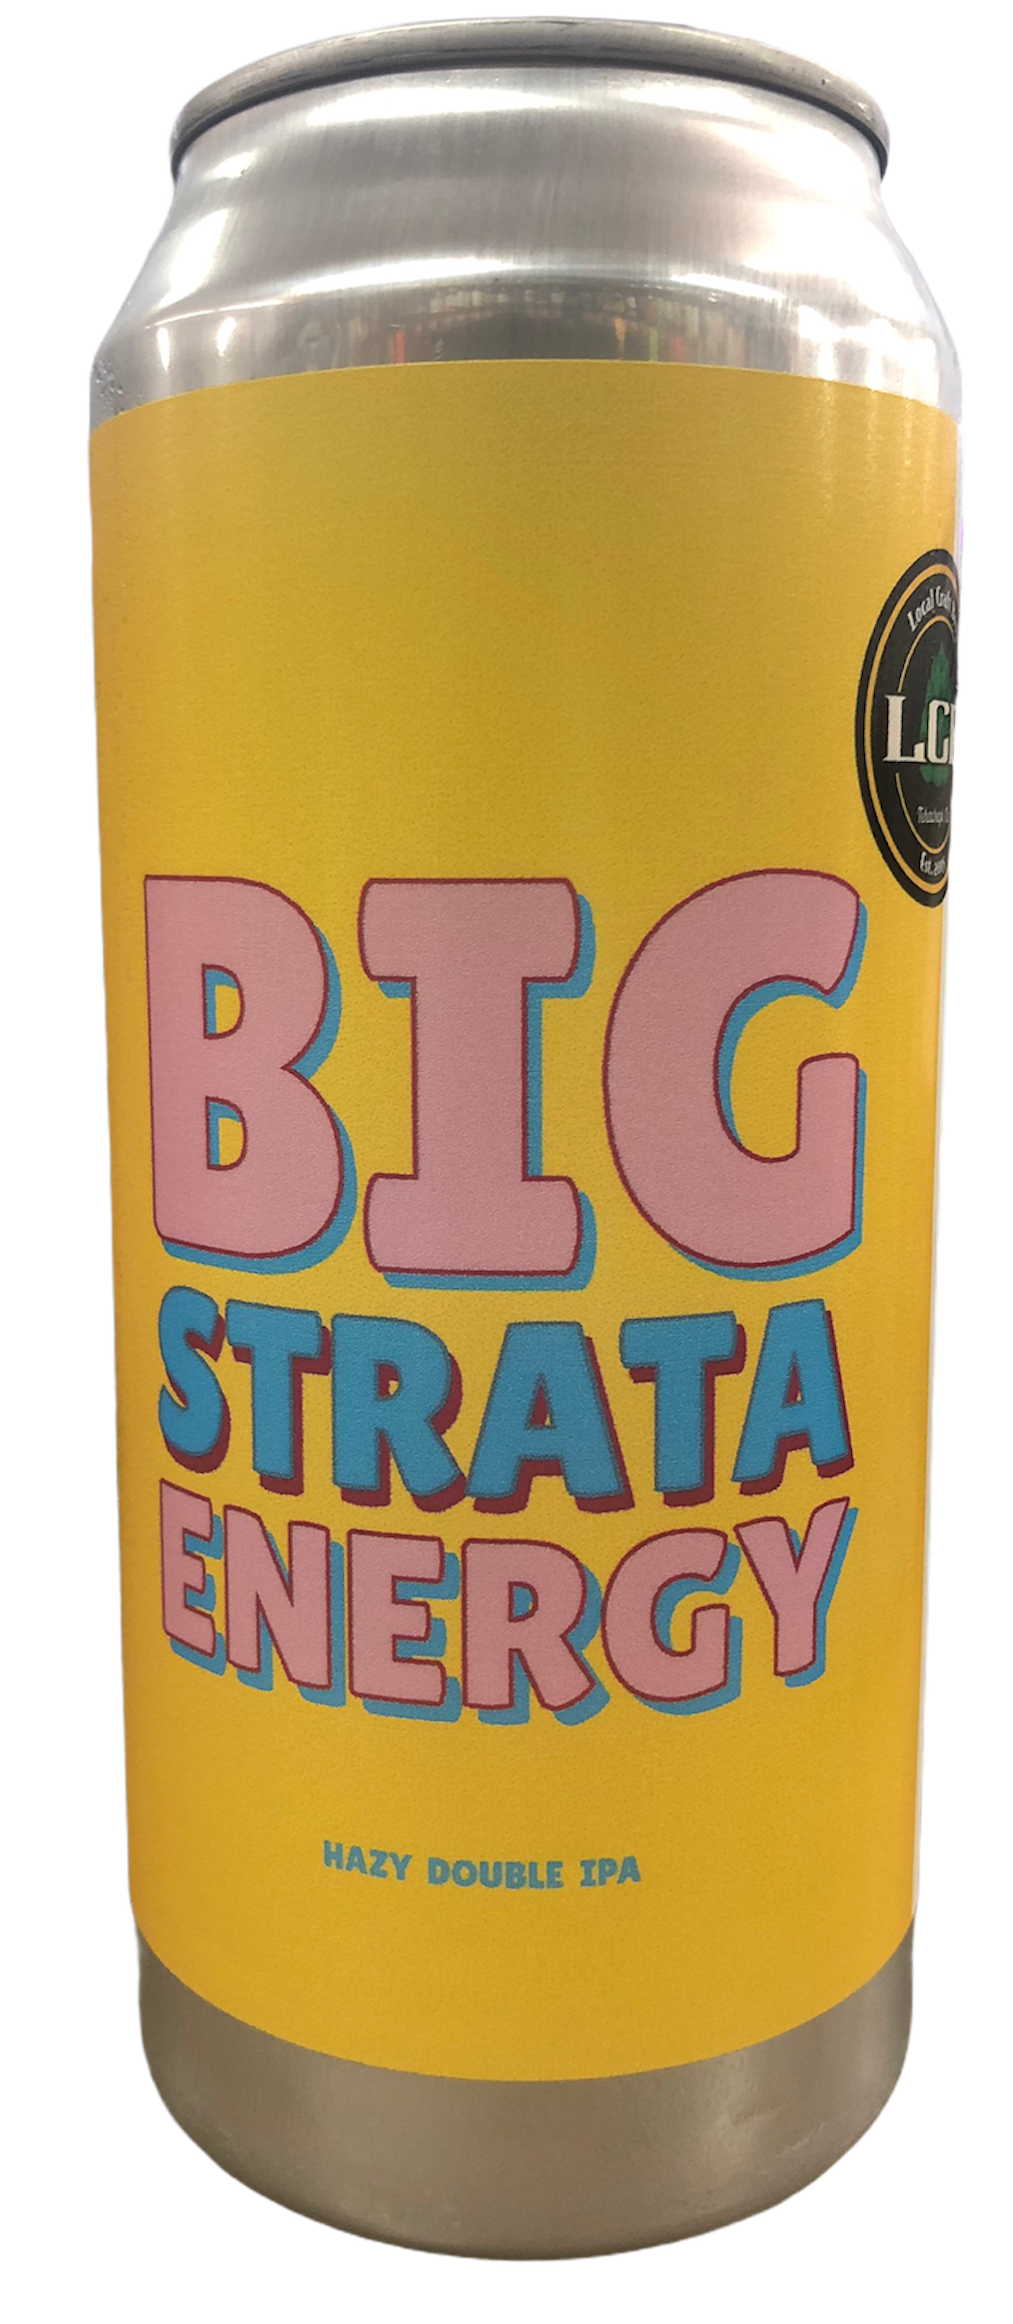 Buy LCB Big Strata Energy Online -Craft City